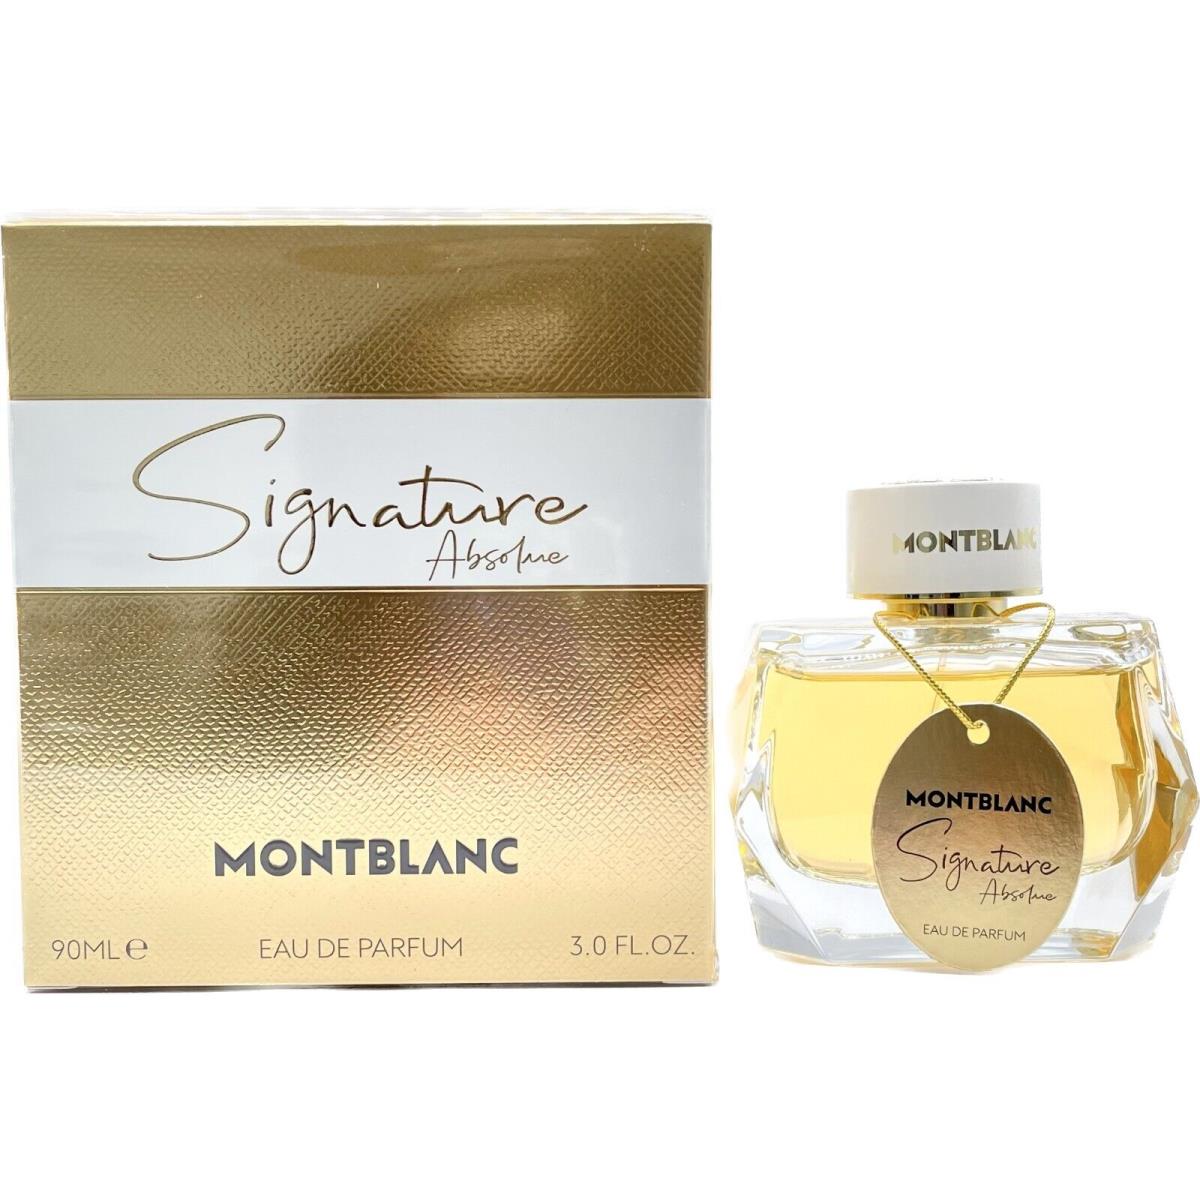 Montblanc Signature Absolue For Women 3.0 oz Eau de Parfum Spray